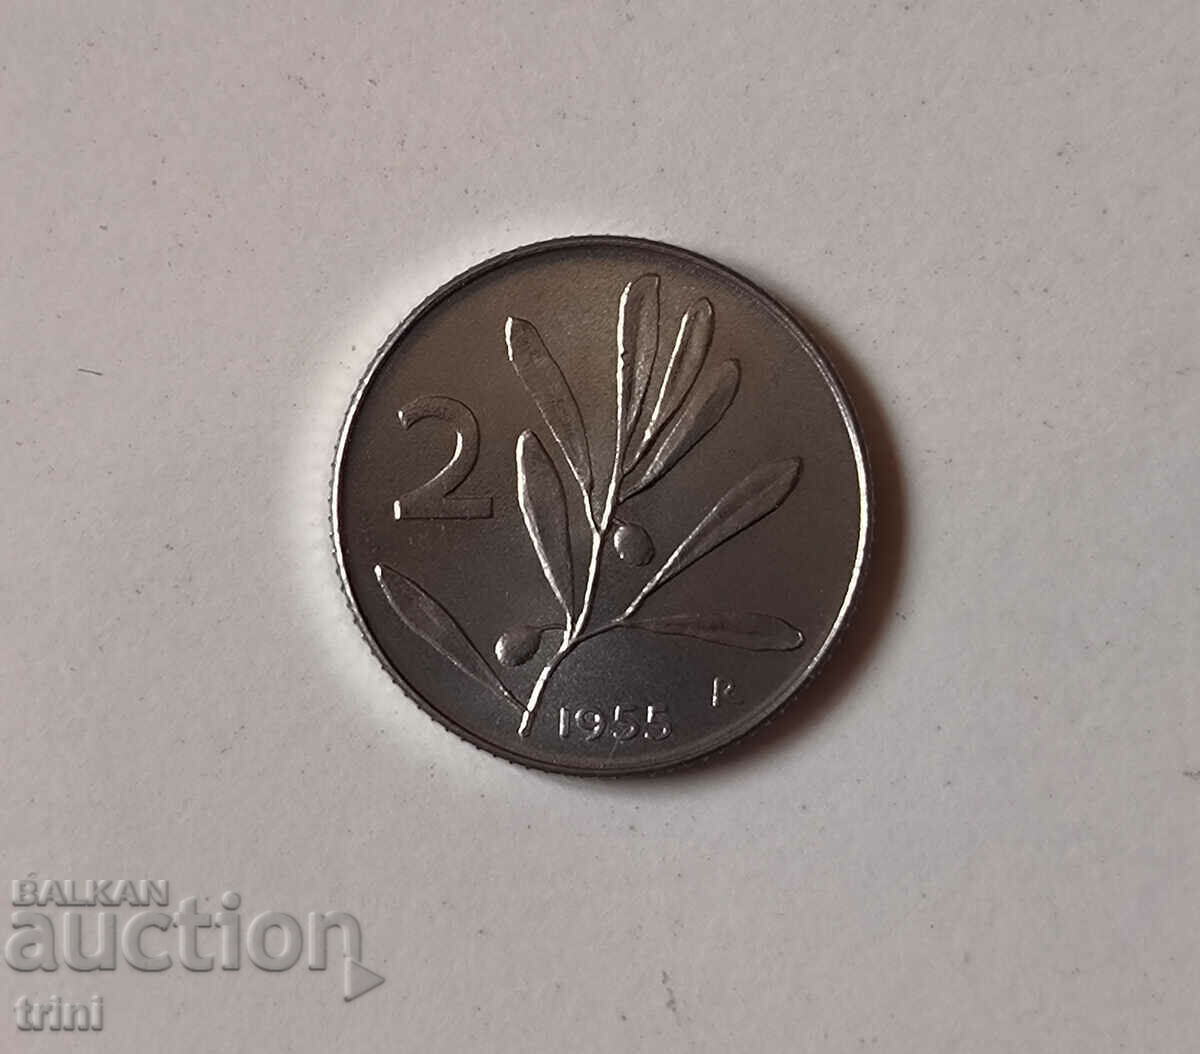 Italy 2 lira 1955 year g104